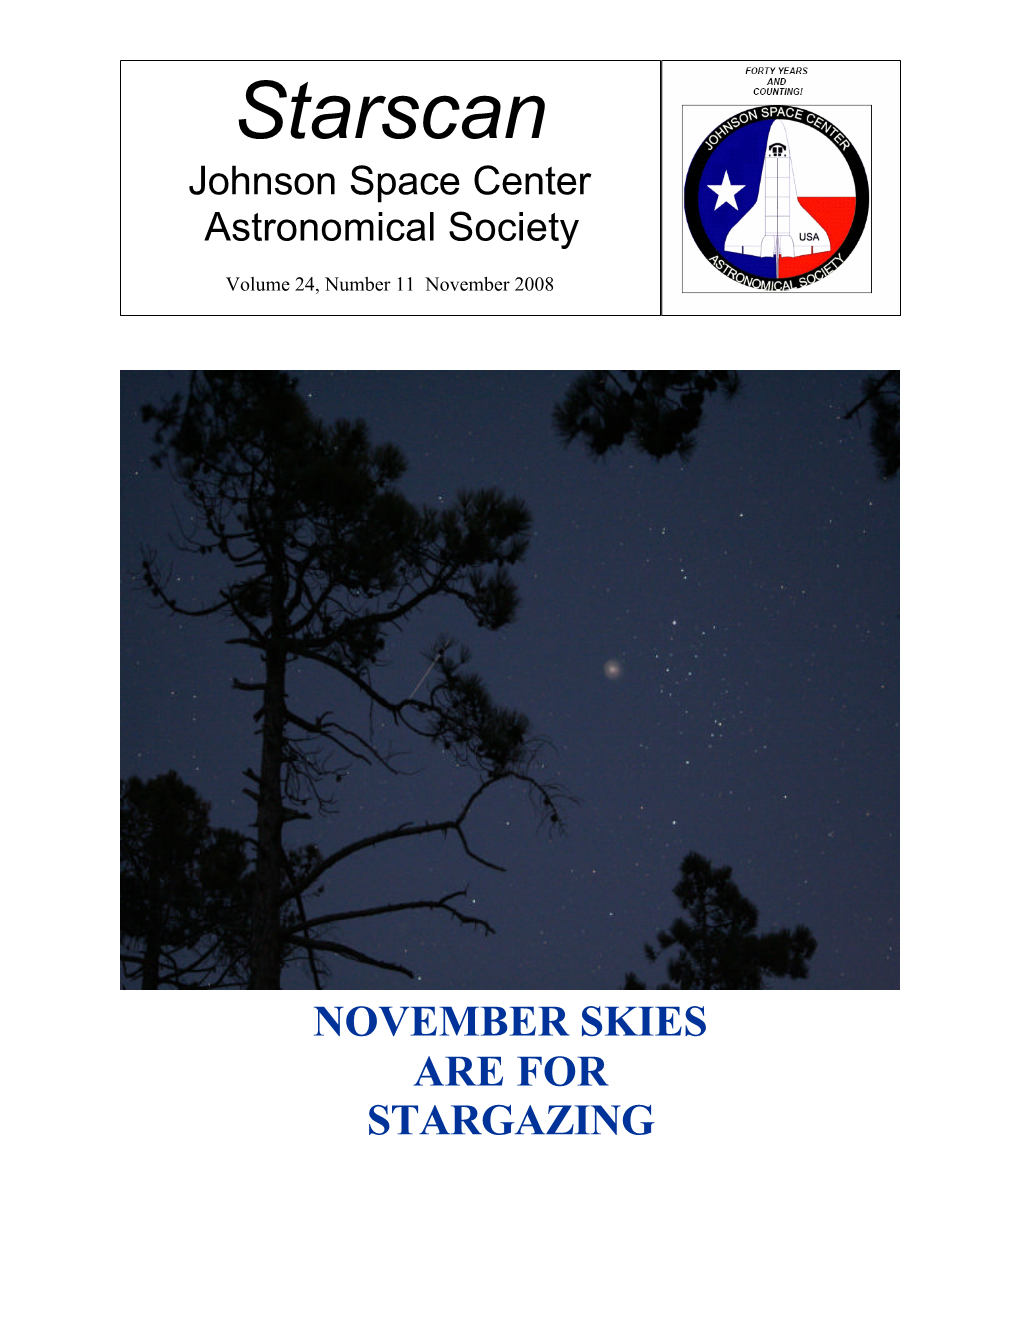 Starscan Johnson Space Center Astronomical Society